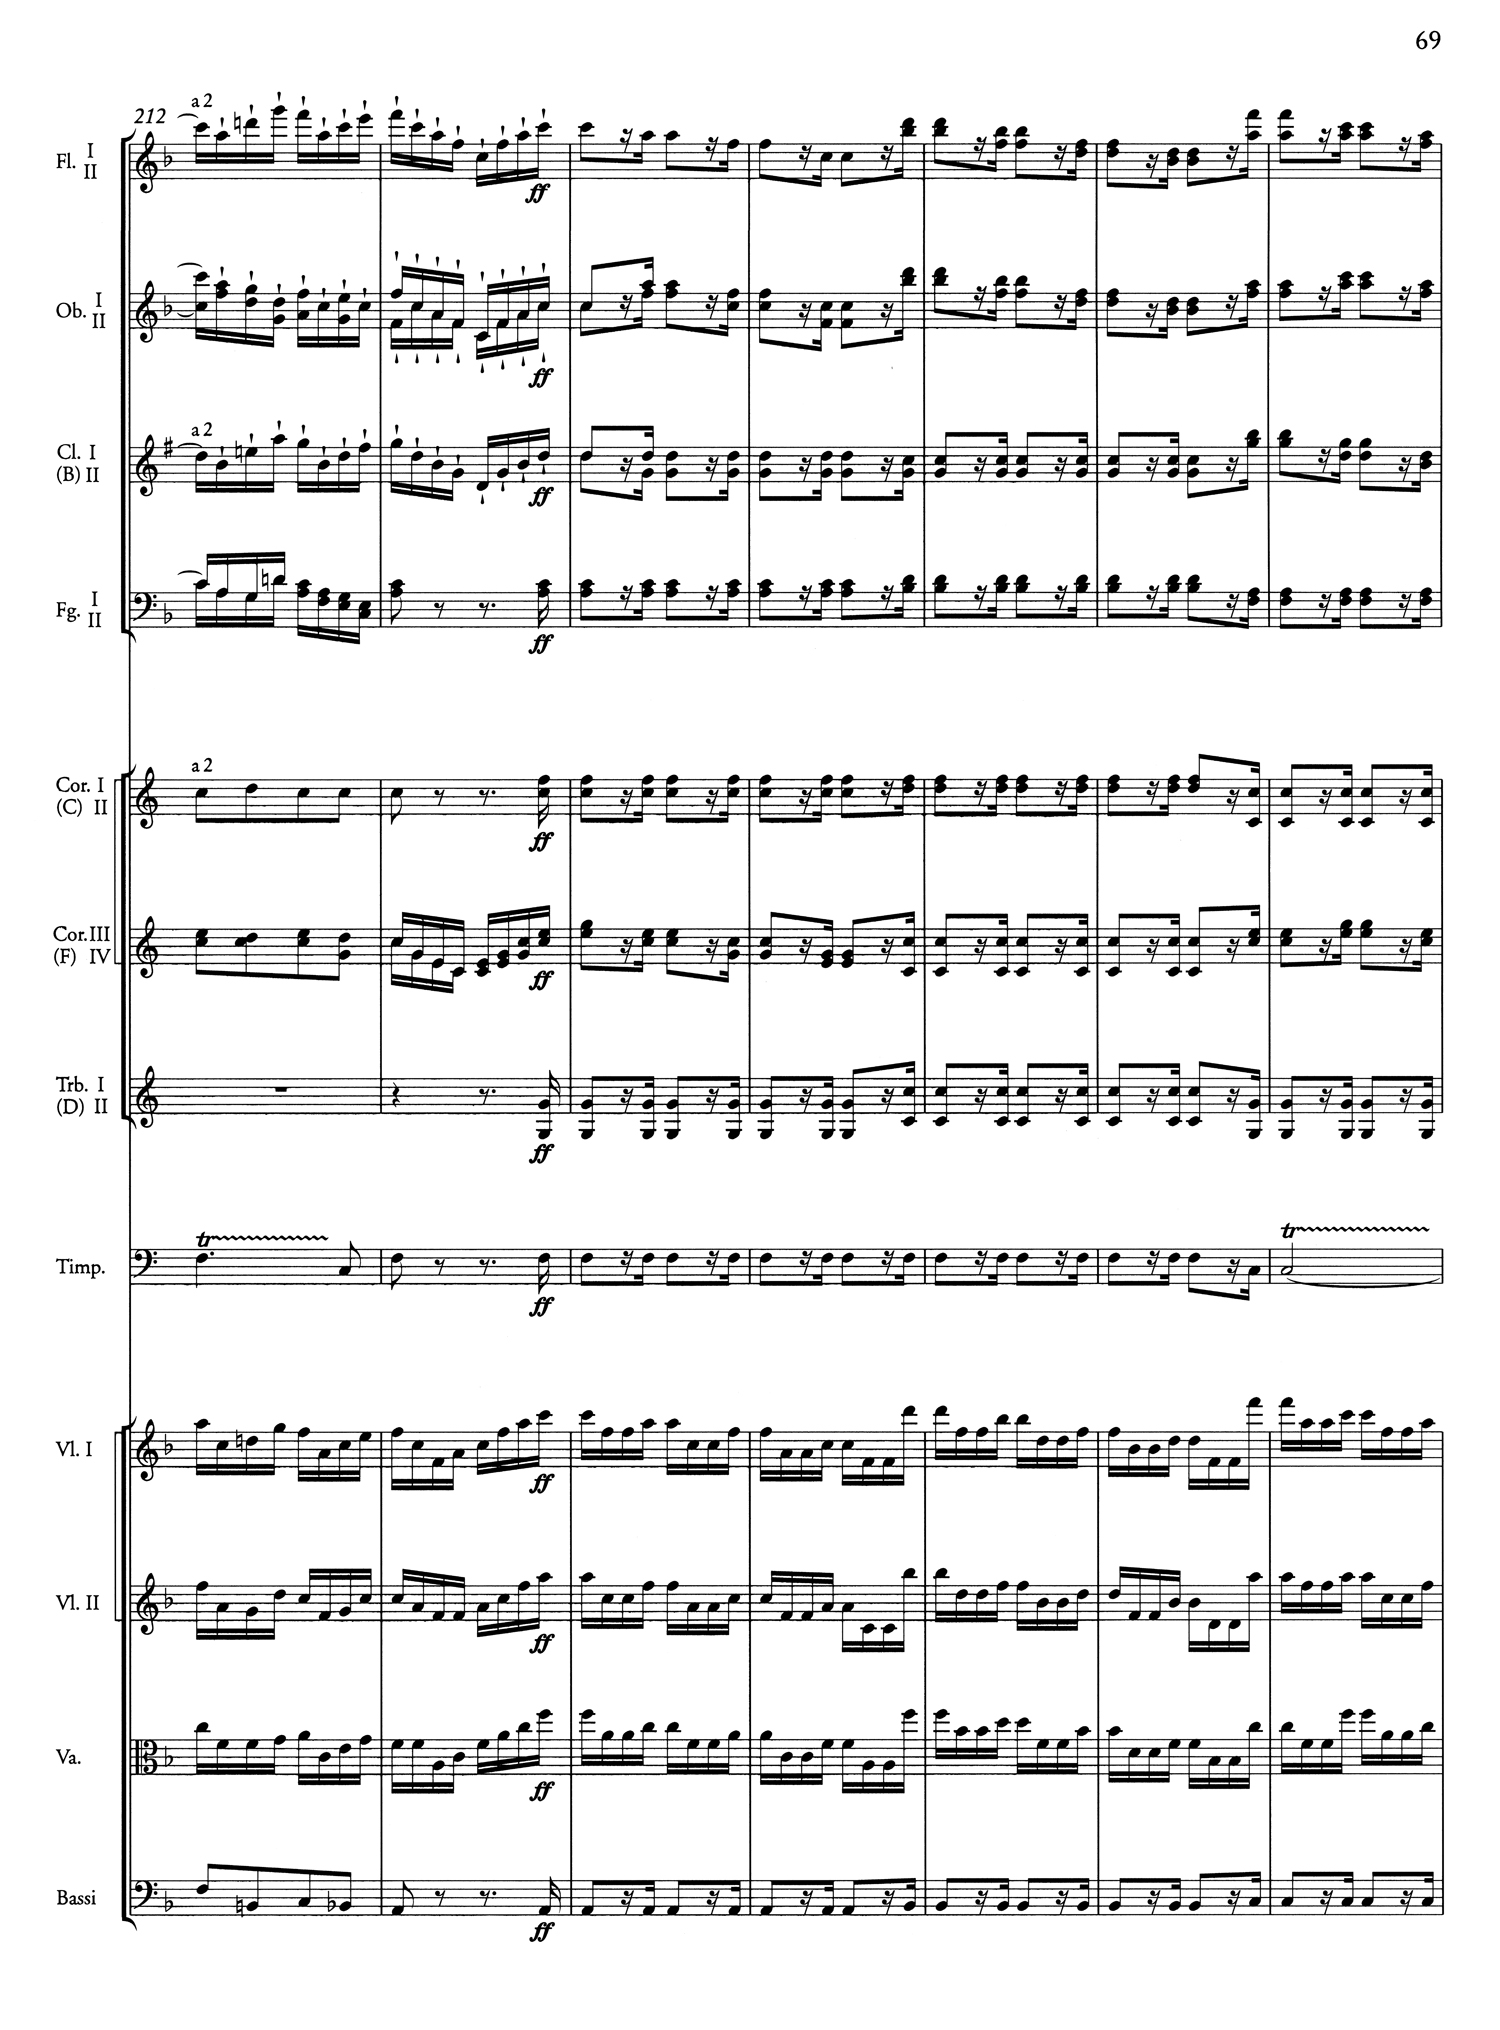 Mendelssohn Score 2 Page 5.jpg